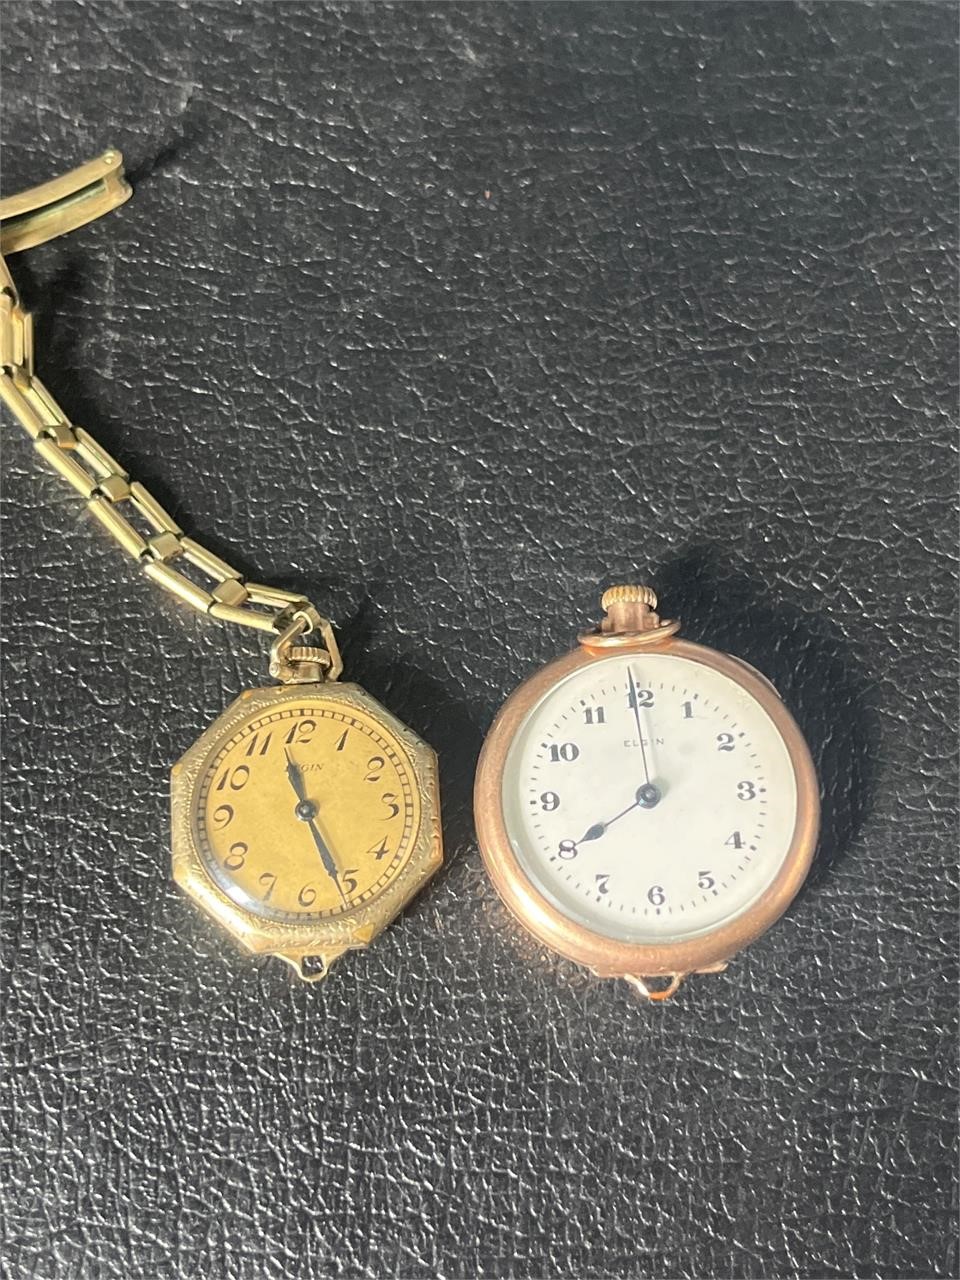 Vintage Elgin pocket watch and watch